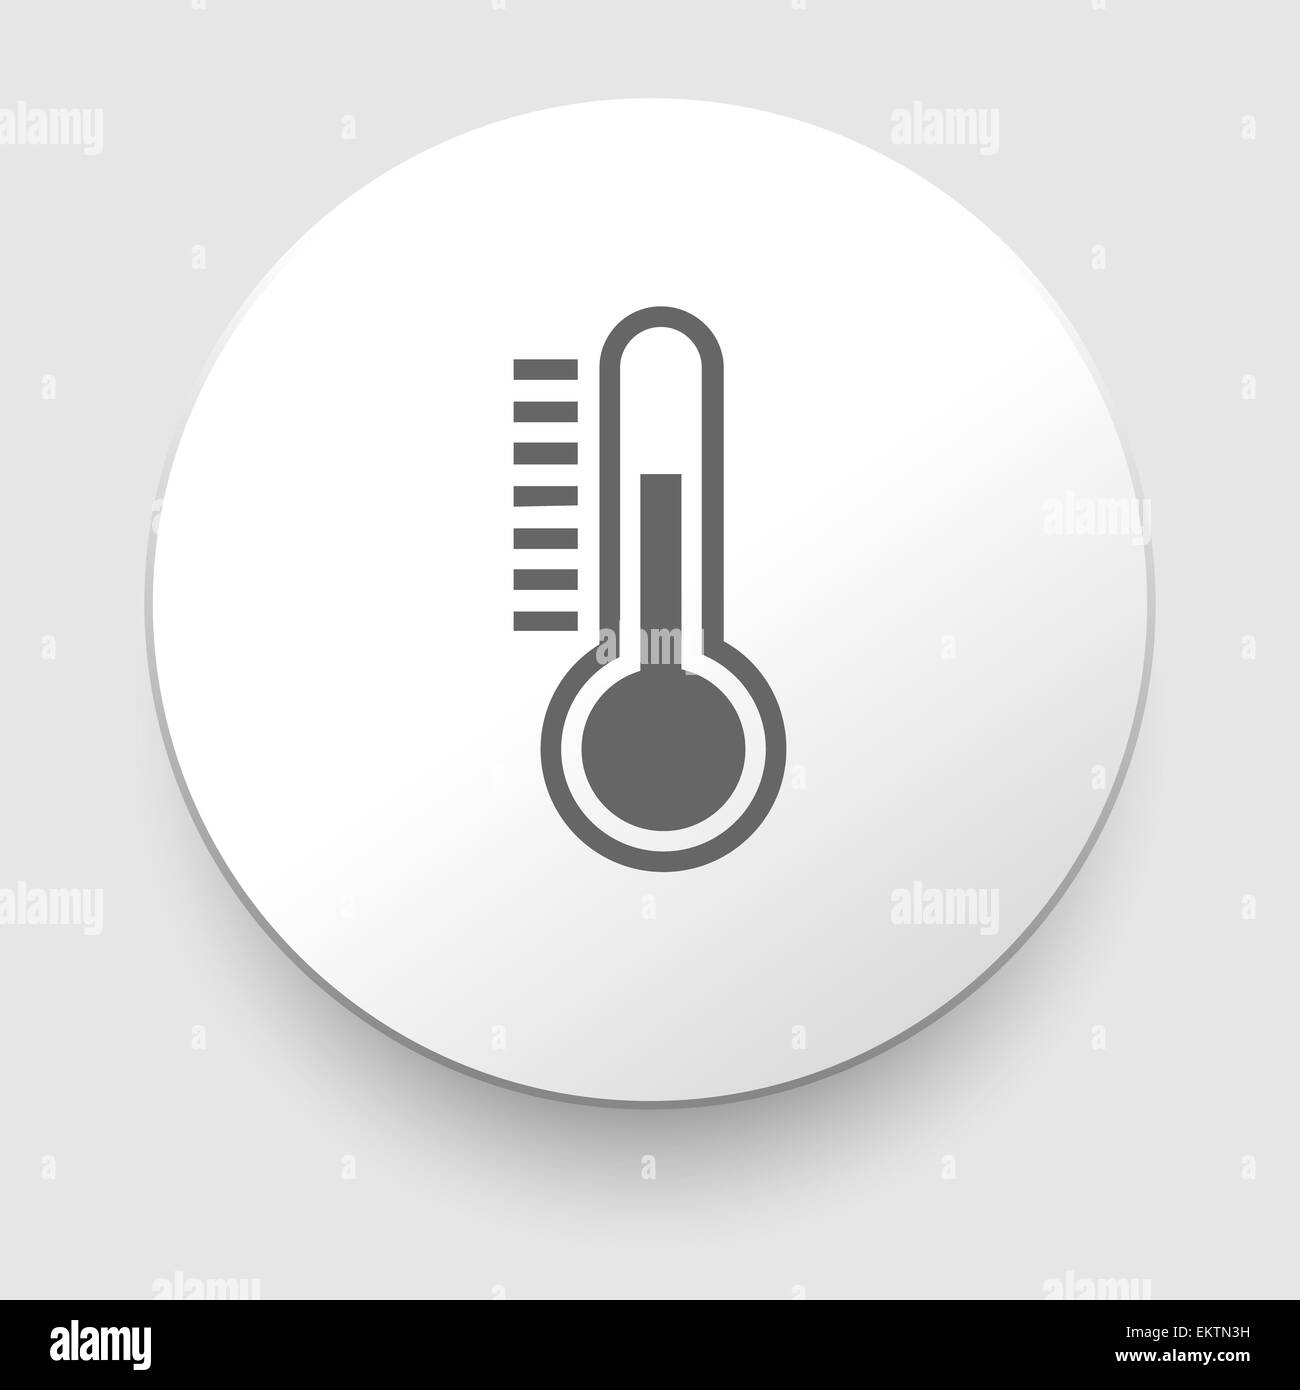 Thermometer icon Stock Photo